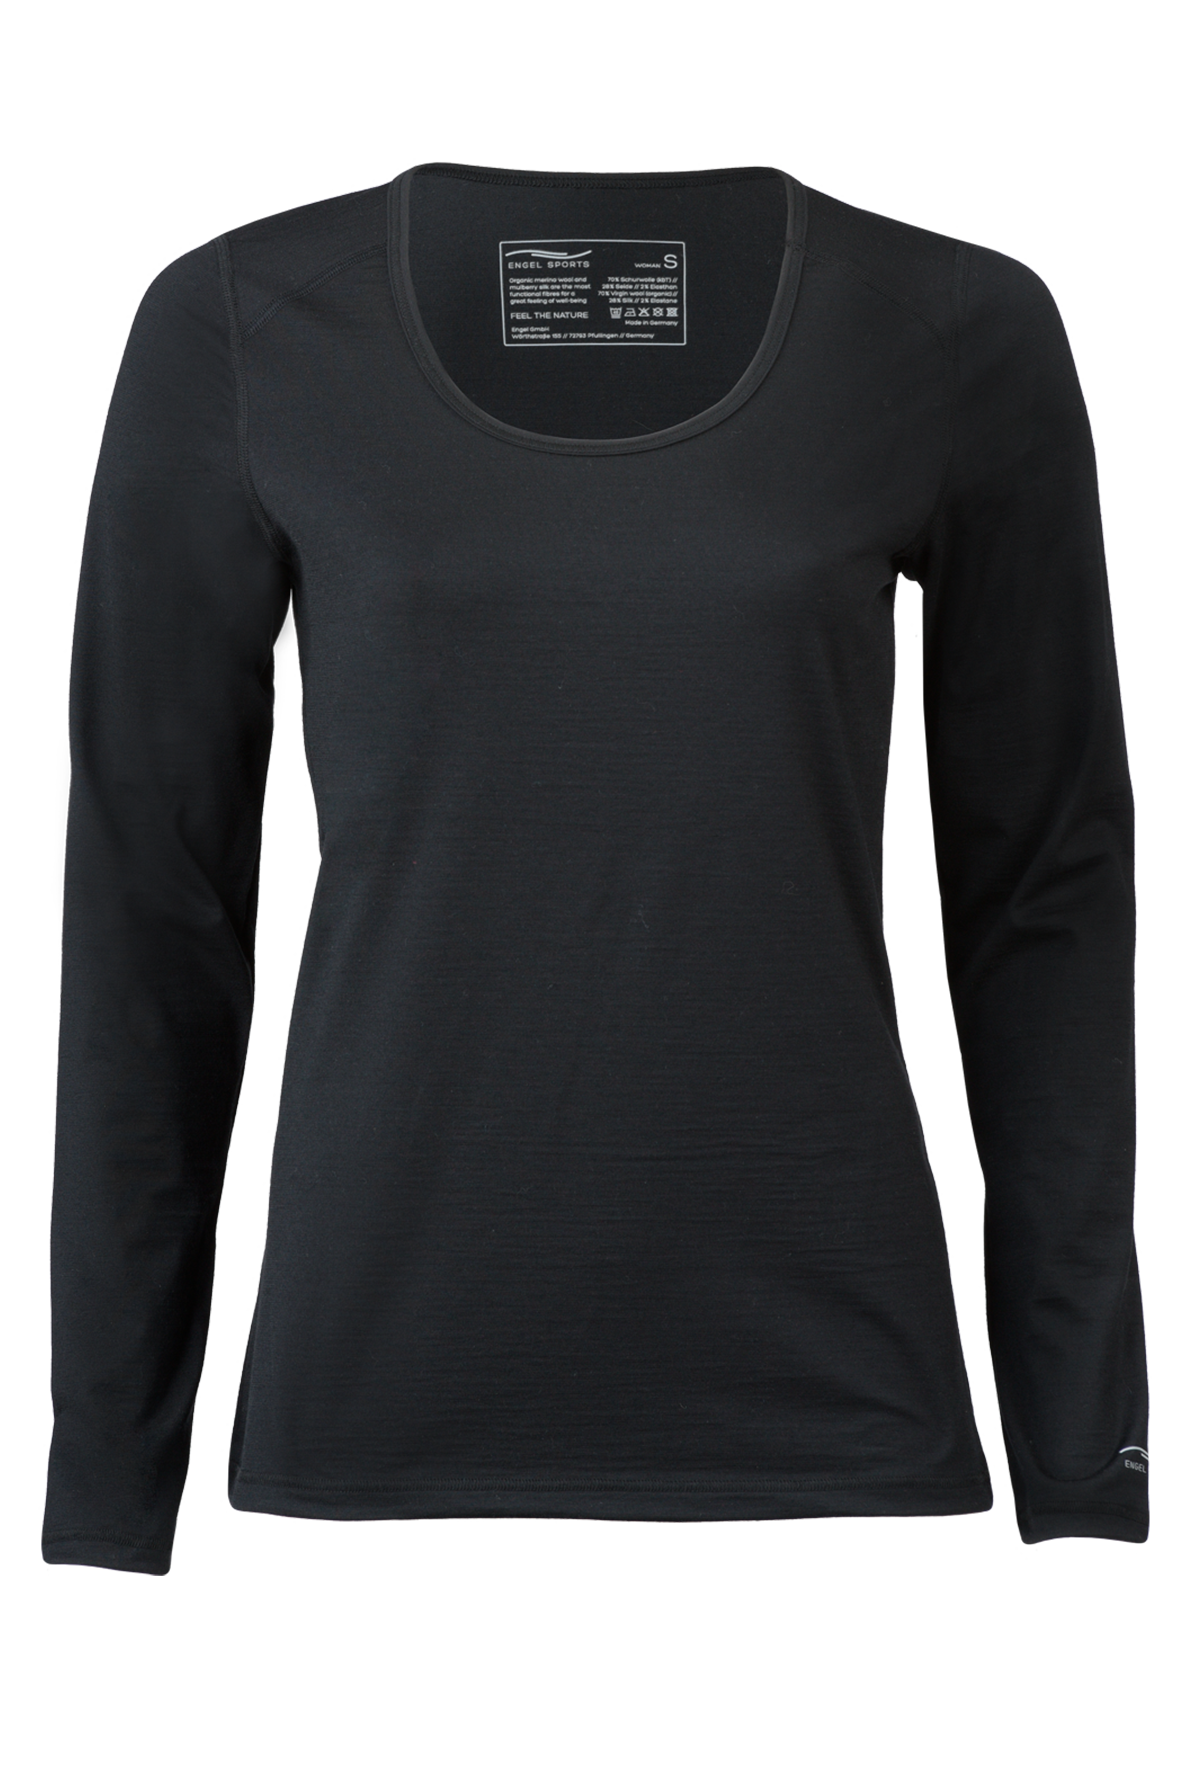 Engel Women's Eco Sport Long Sleeve Shirt, Wool/Silk